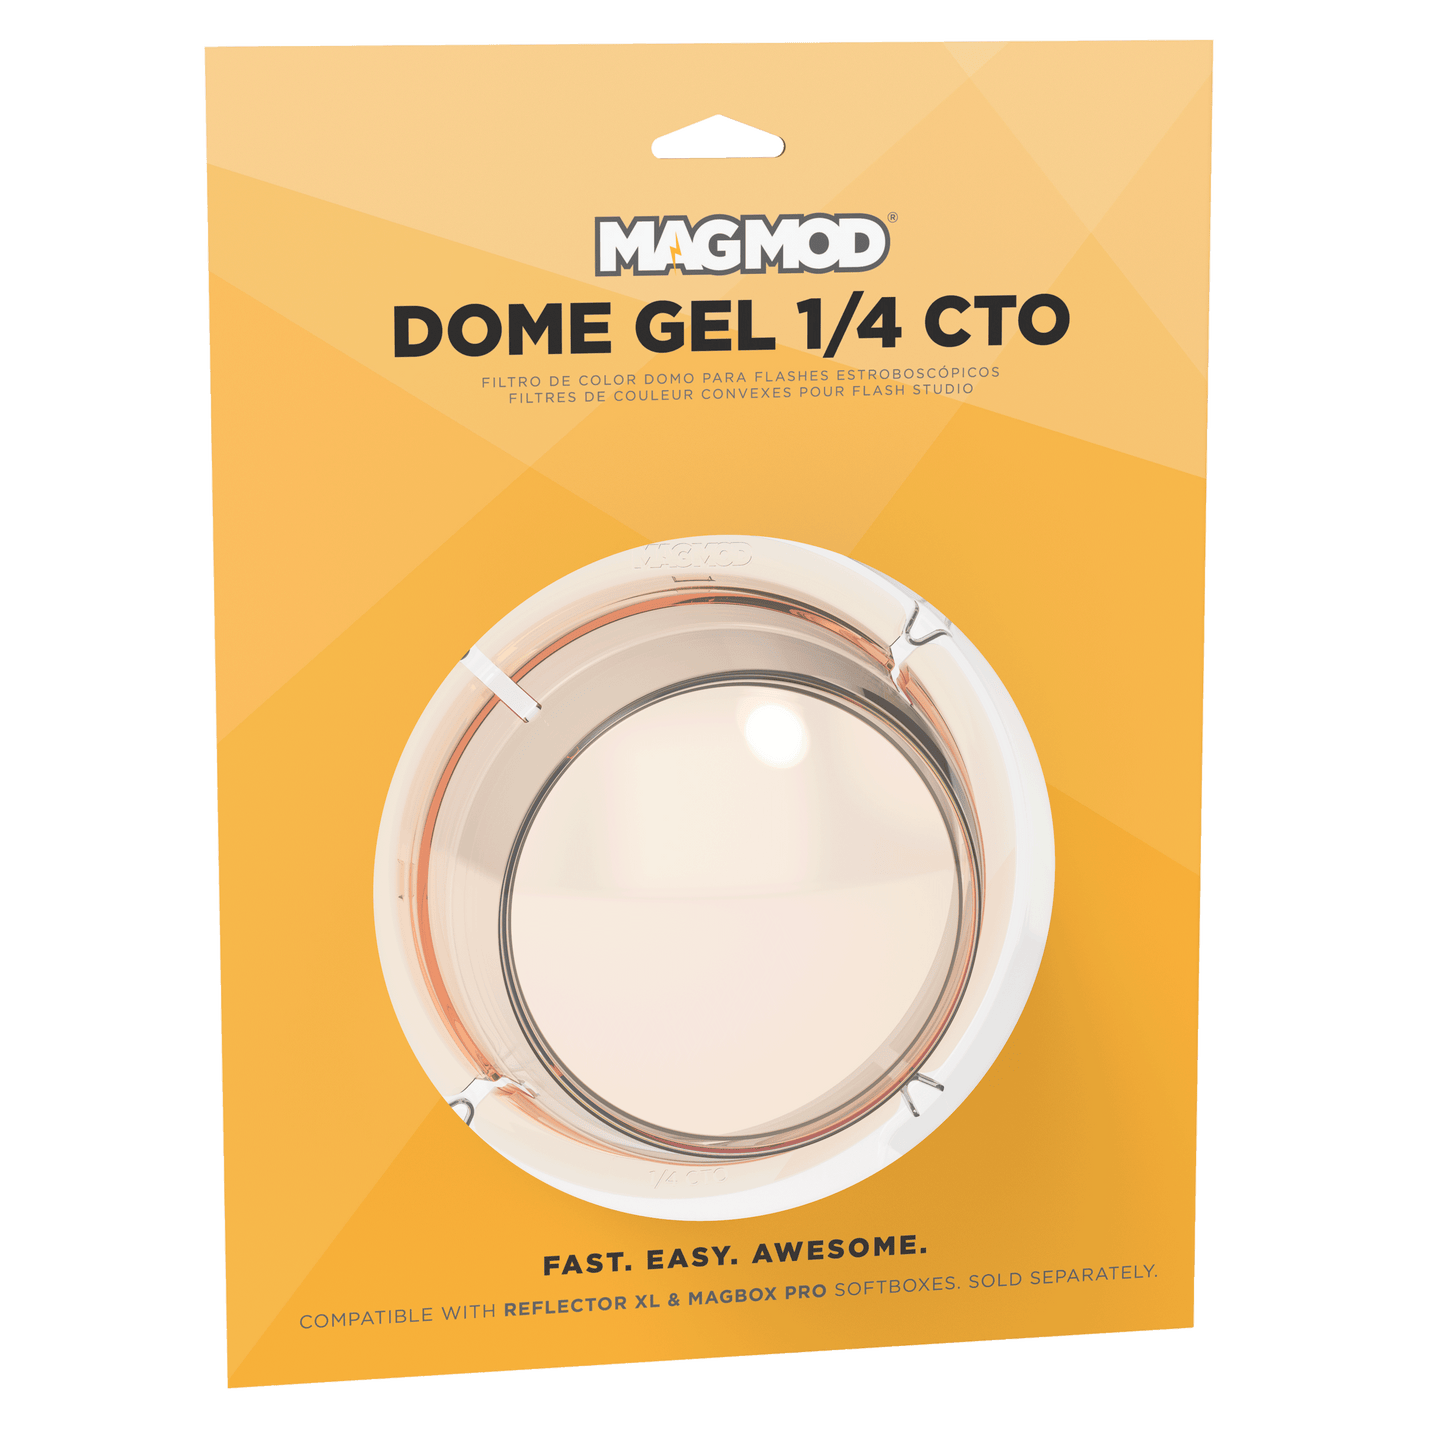 Dome Gel 1/4 CTO - MagnetMod